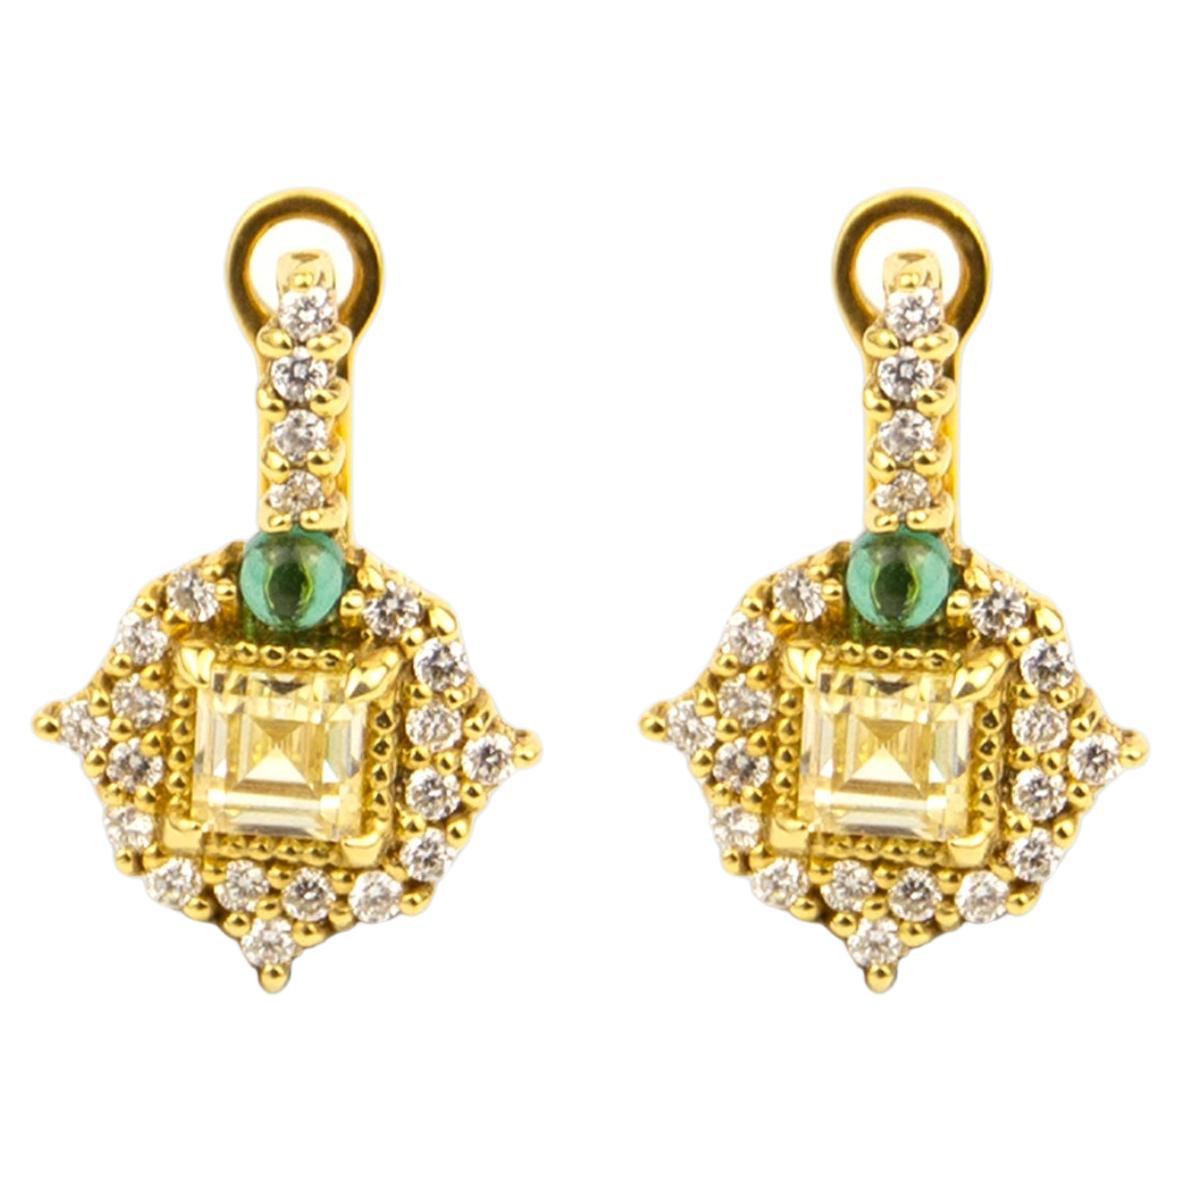 Judith Ripka 18k Yellow Gold Diamond&Quartz&Canary Crystal Earrings